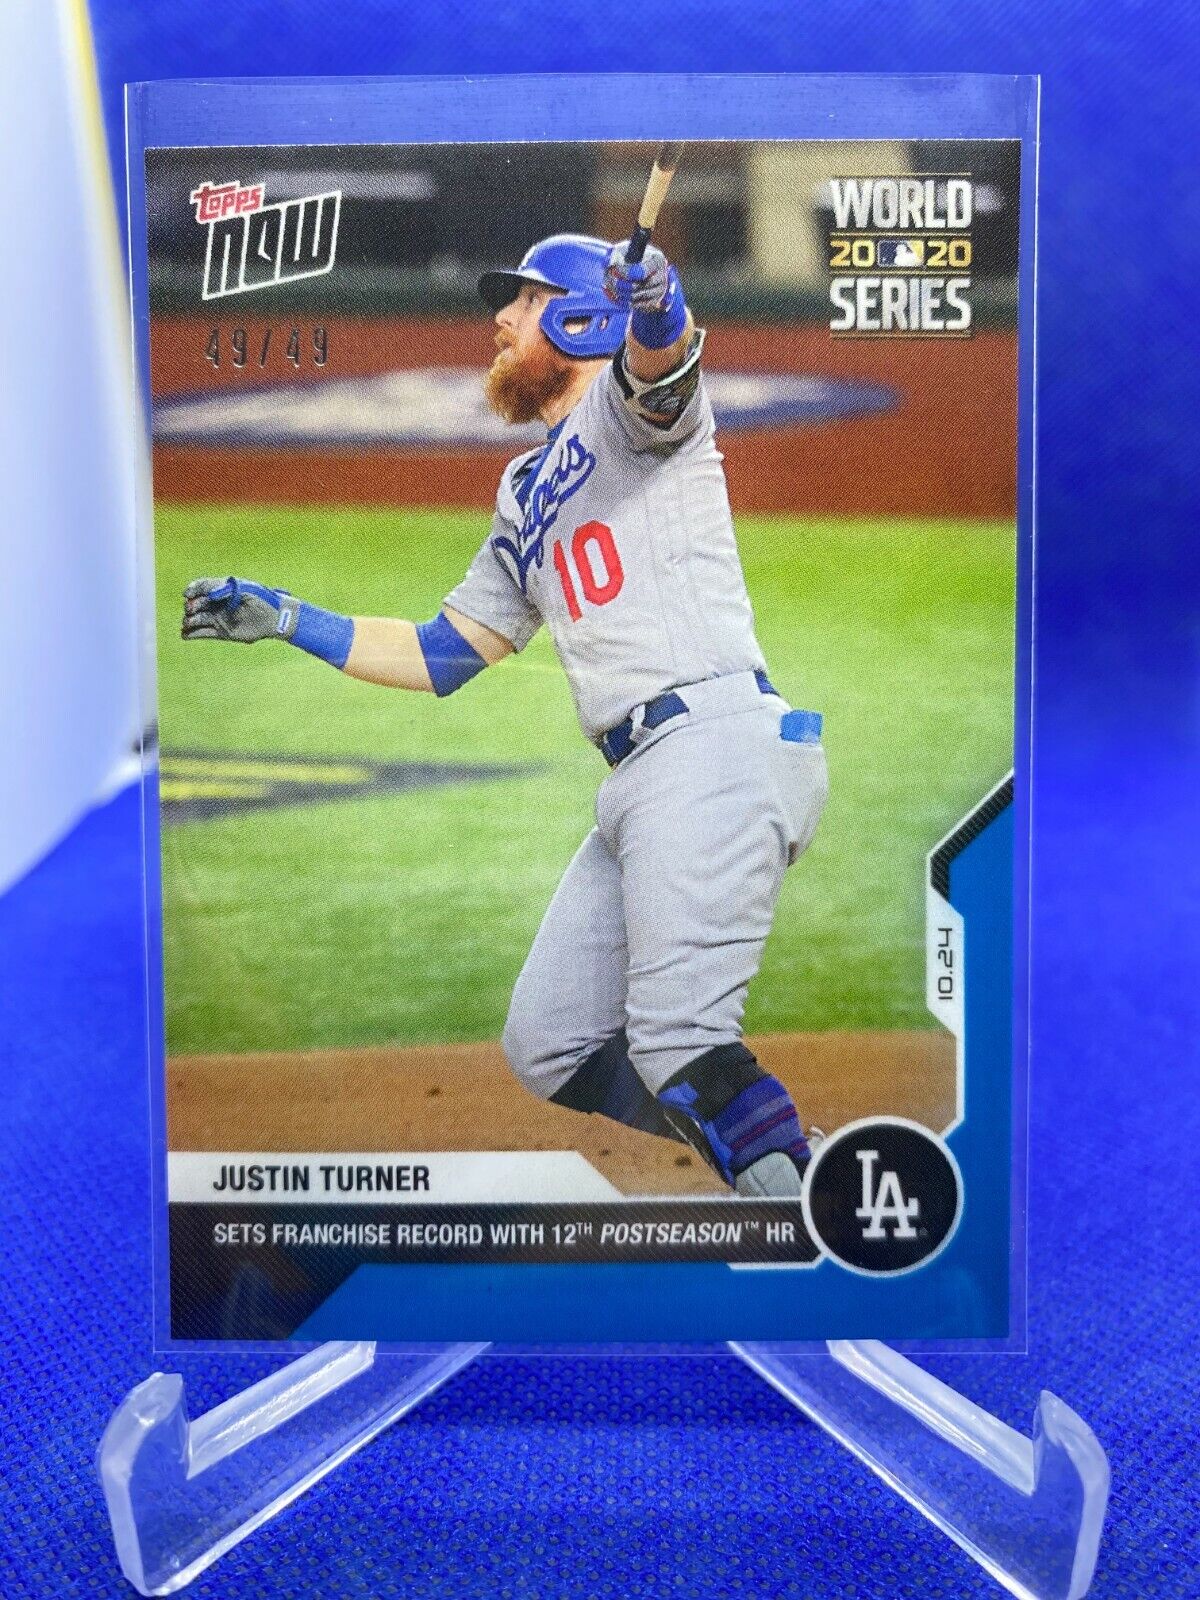 BRAND NEW Dodgers Blue Justin Turner Baseball Jersey WORLD